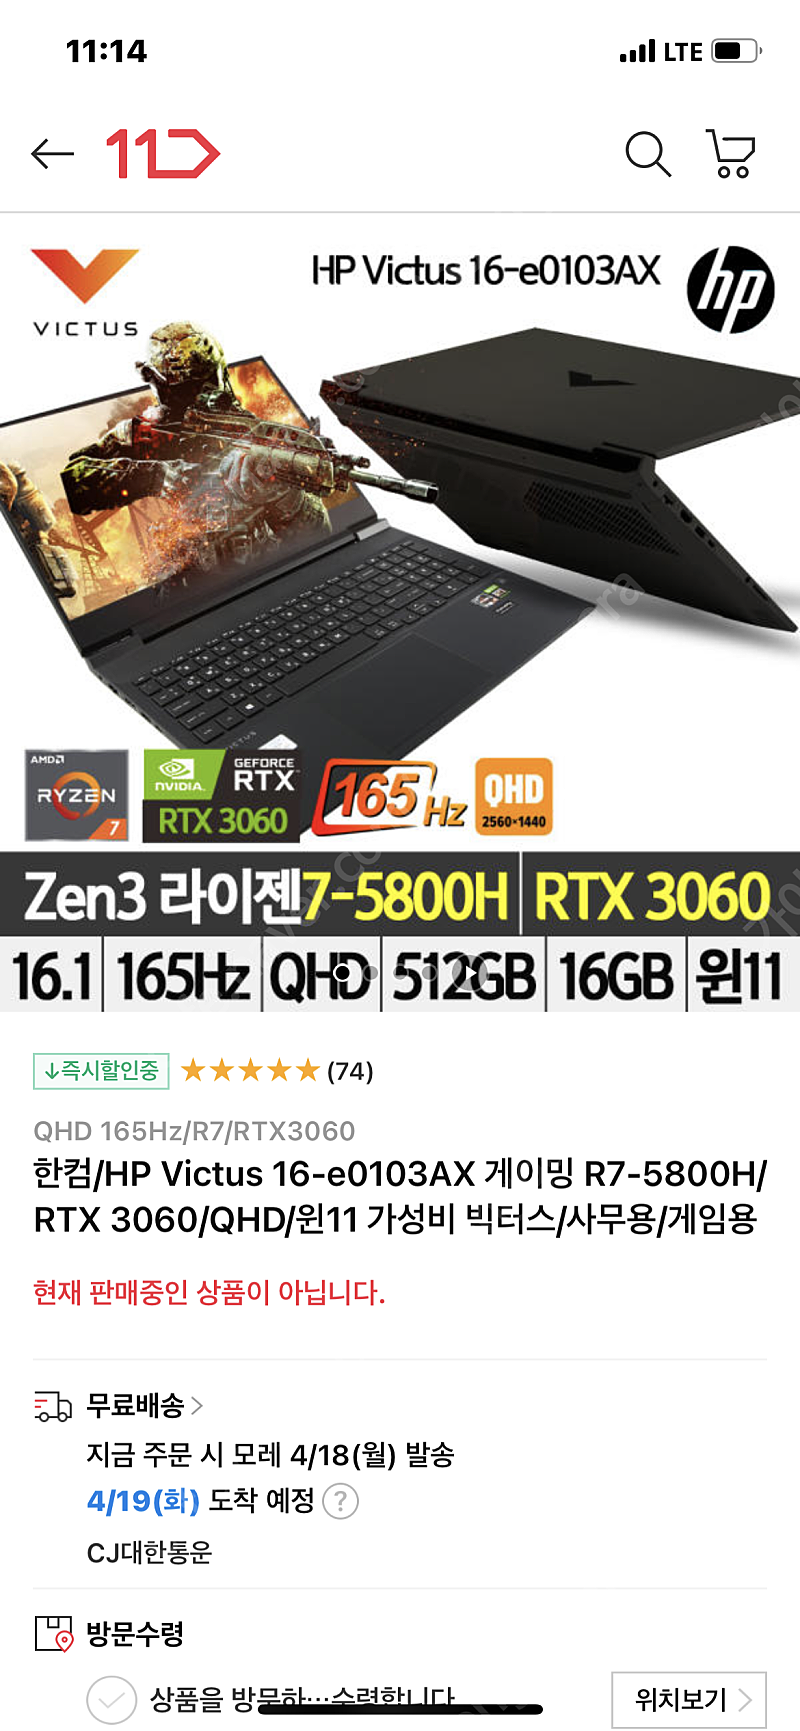 HP victus 16-e0103AX RTX3060 게이밍 노트북 판매 합니다.